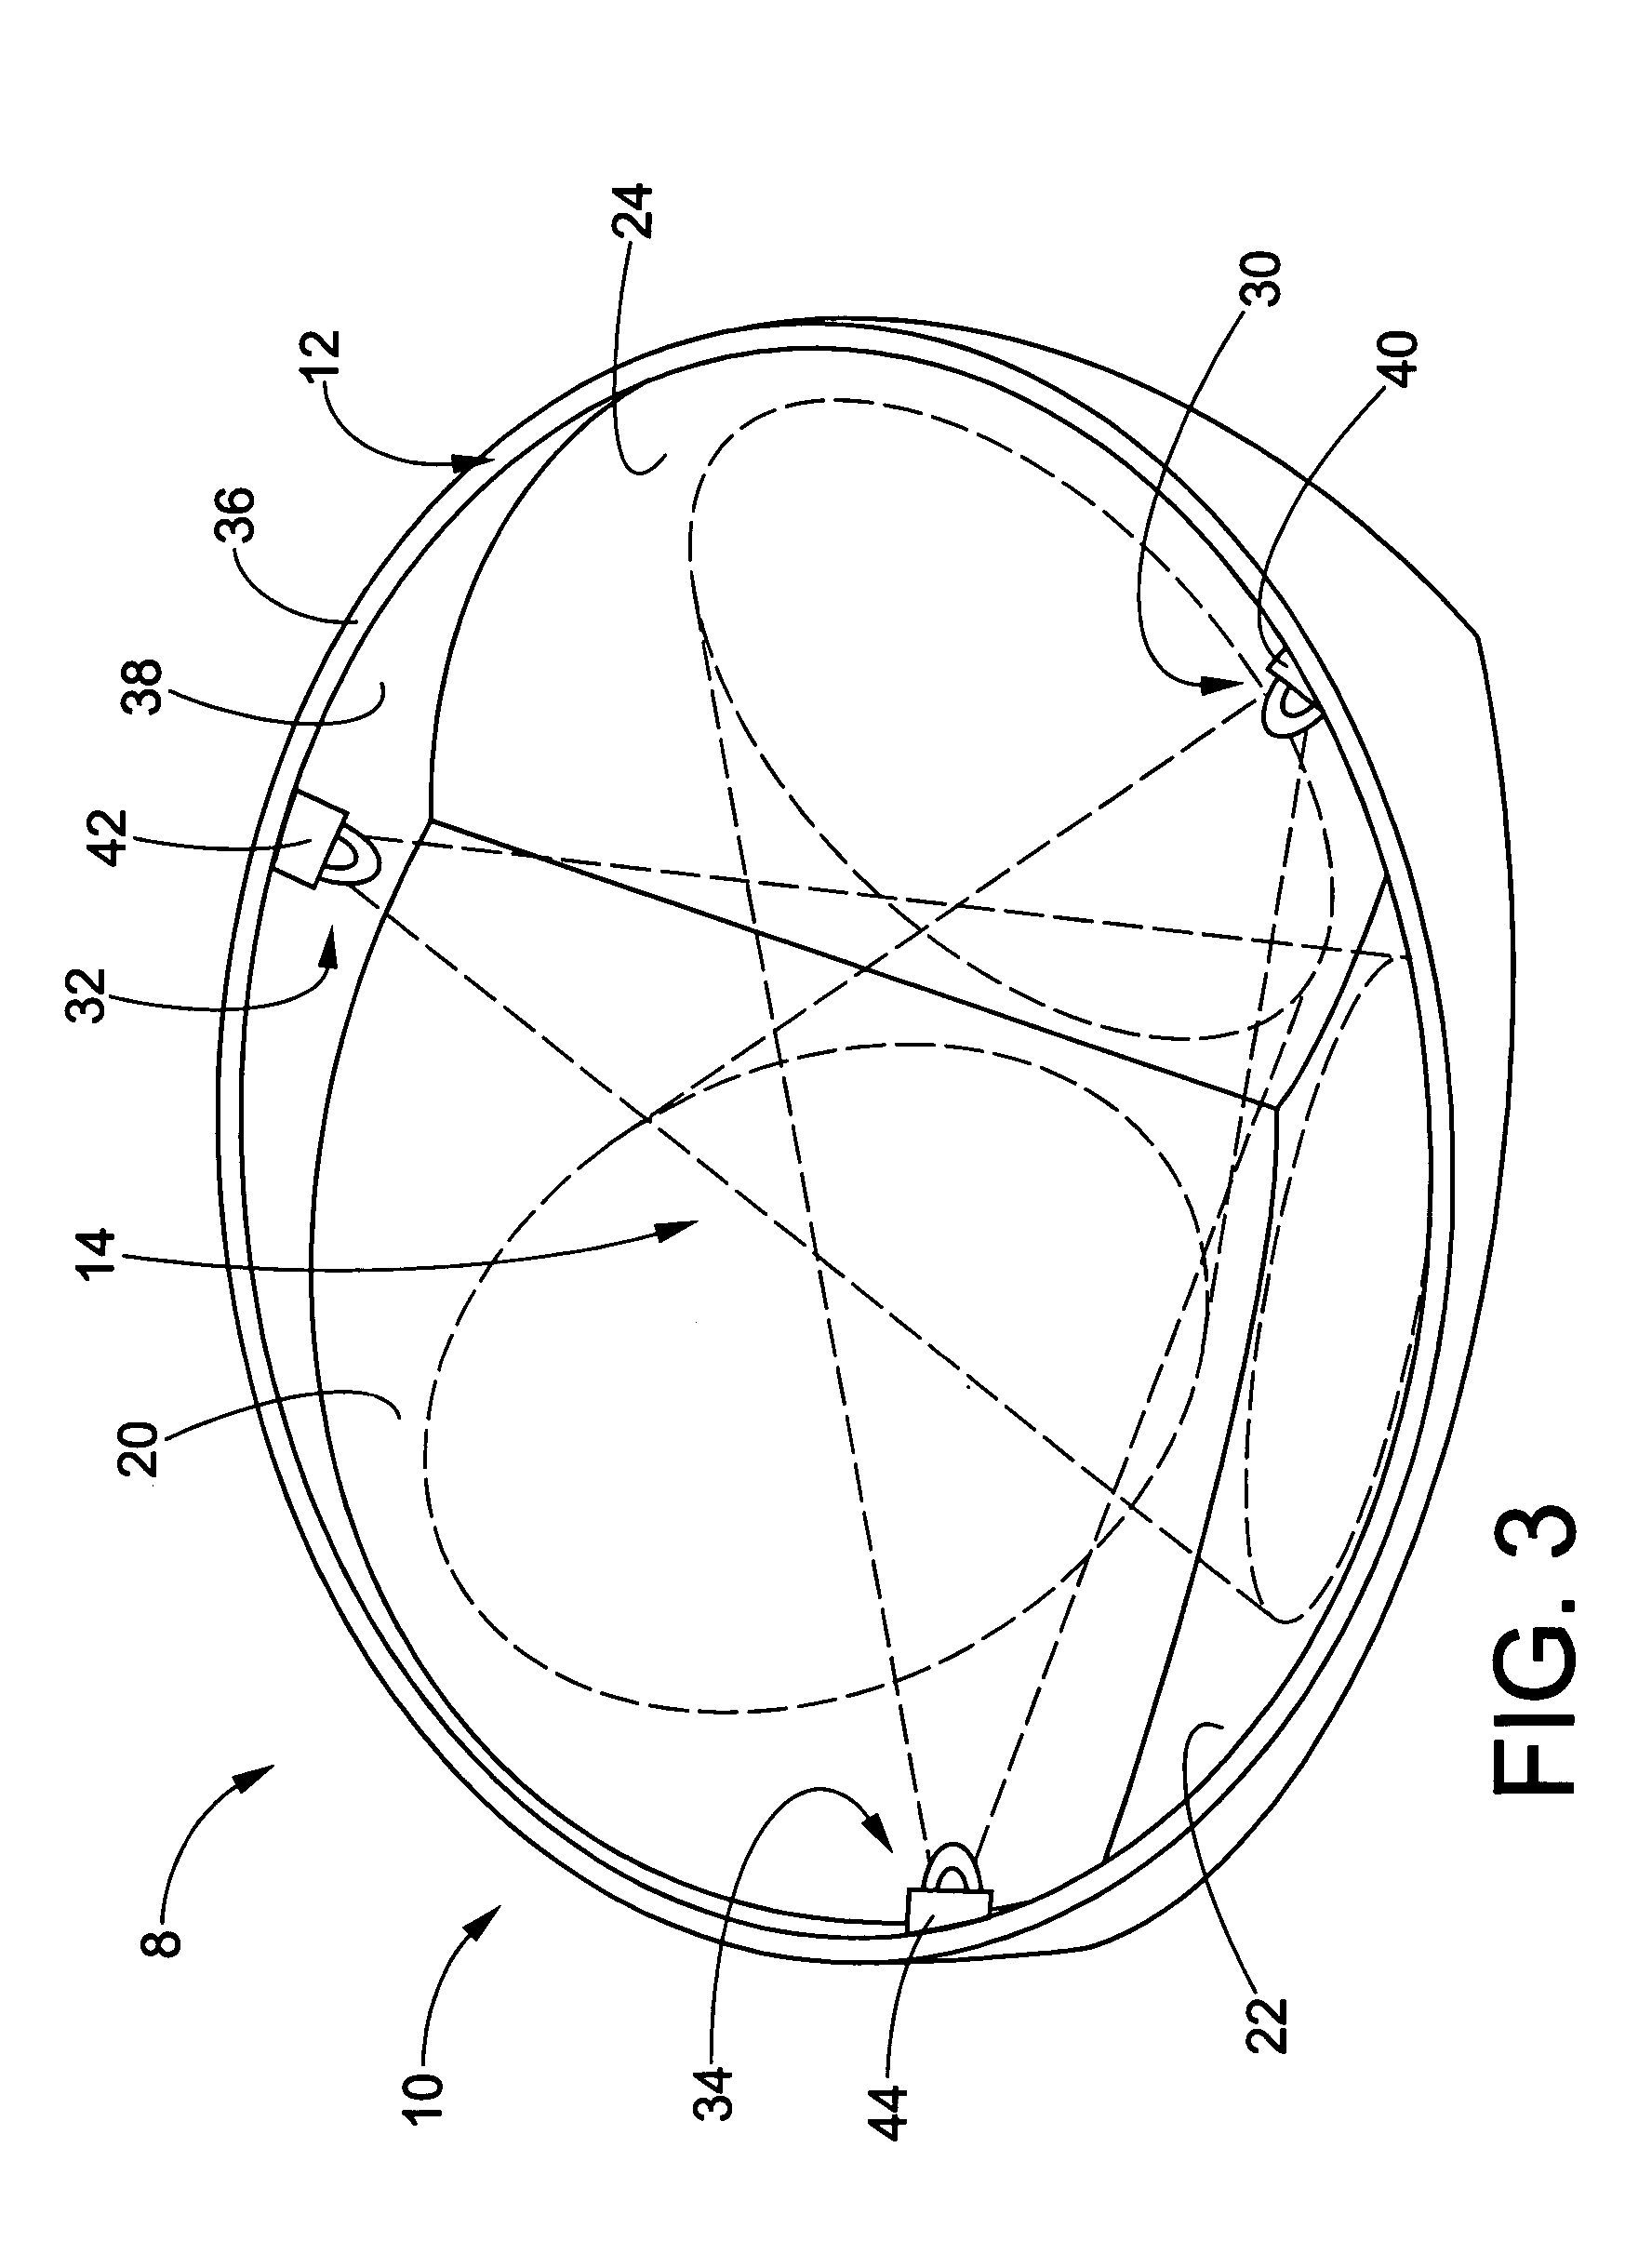 Off-axis parabolic reflector